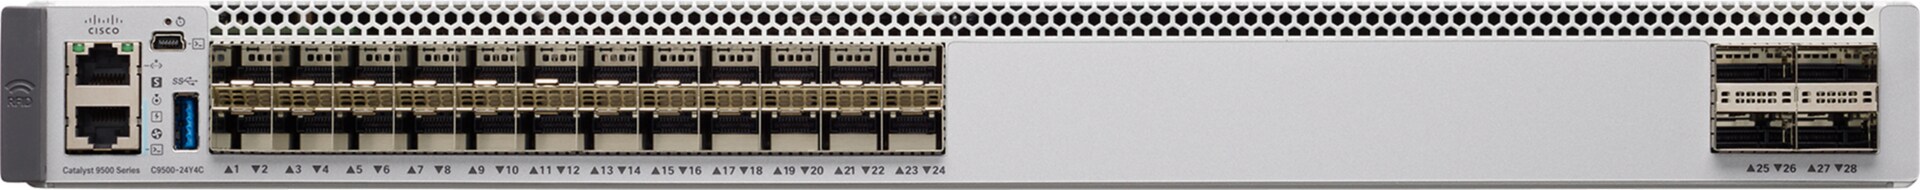 Cisco Catalyst 9500 Series High Performance 48-port 25 Gigabit Ethernet Swi